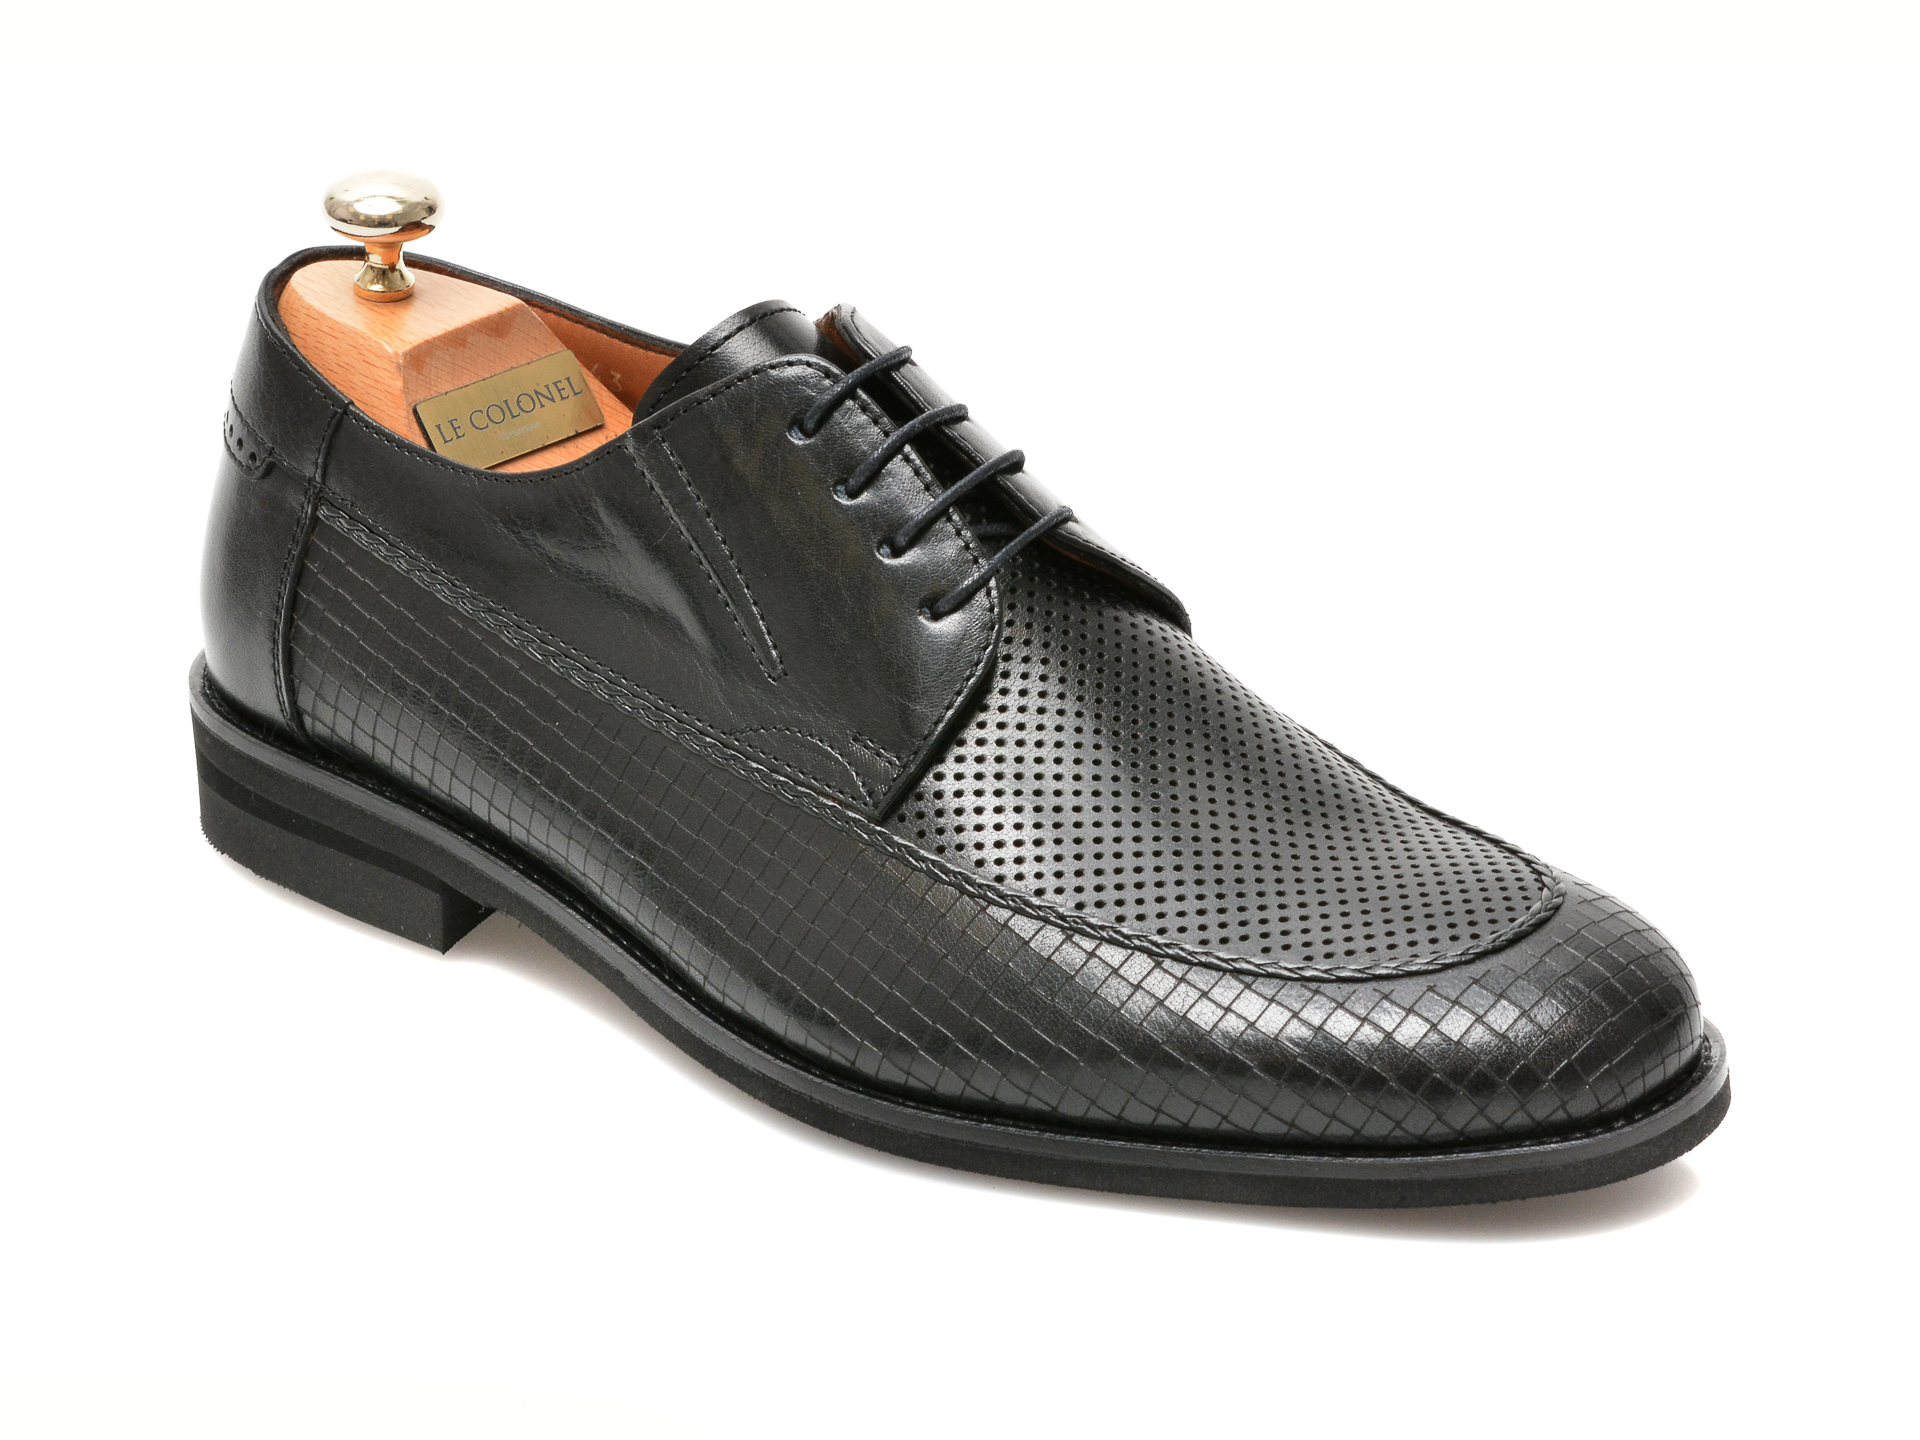 Pantofi LE COLONEL negri, 48856, din piele naturala /barbati/pantofi